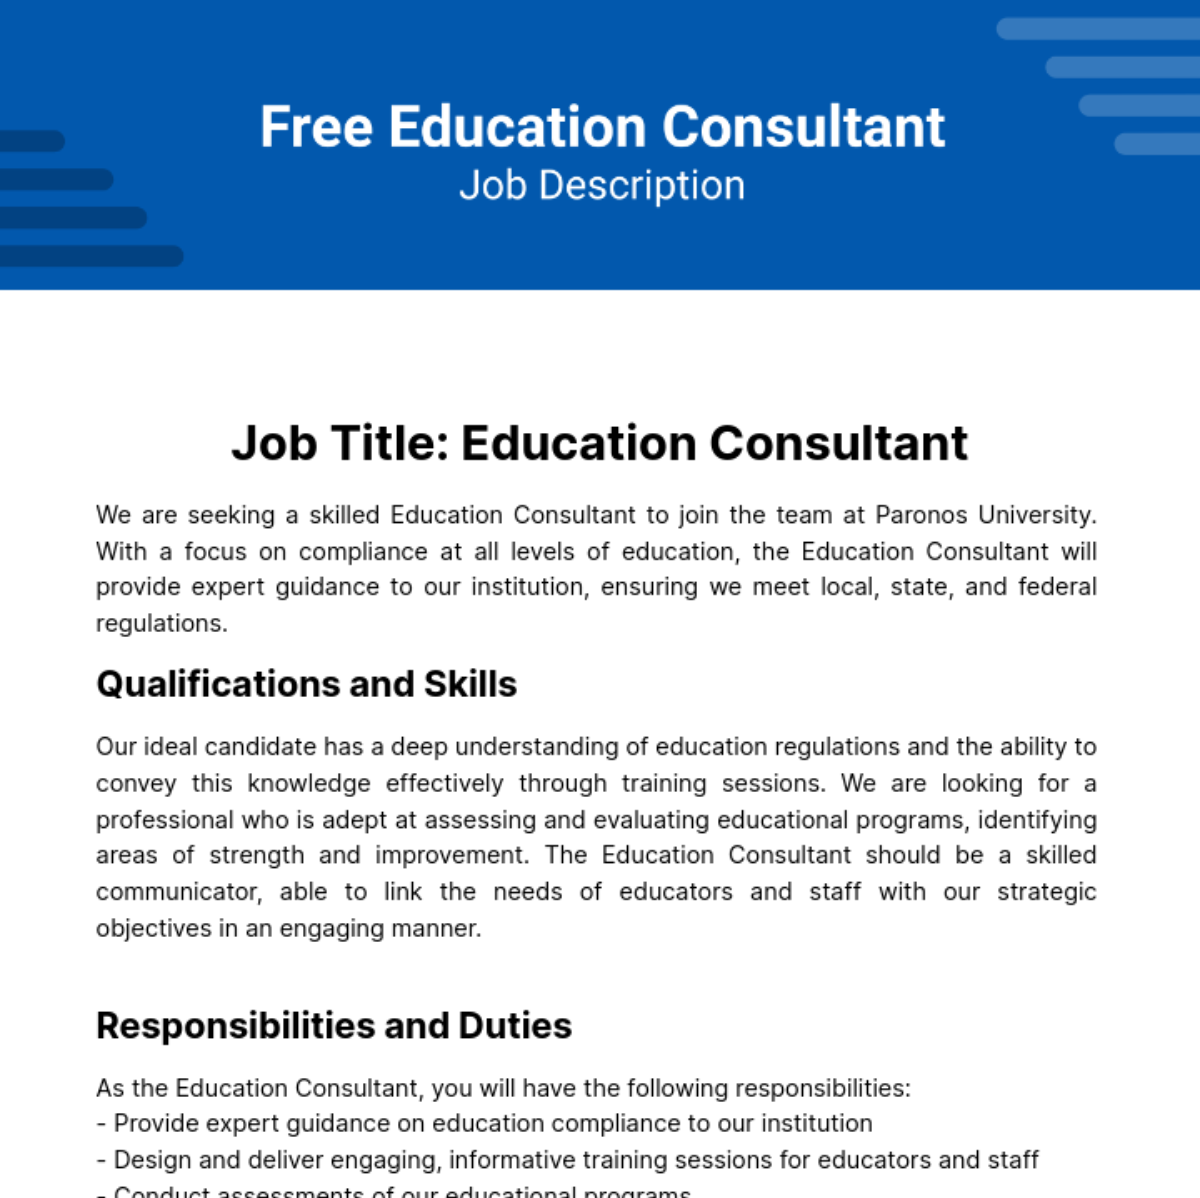 Free Education Consultant Job Description Template